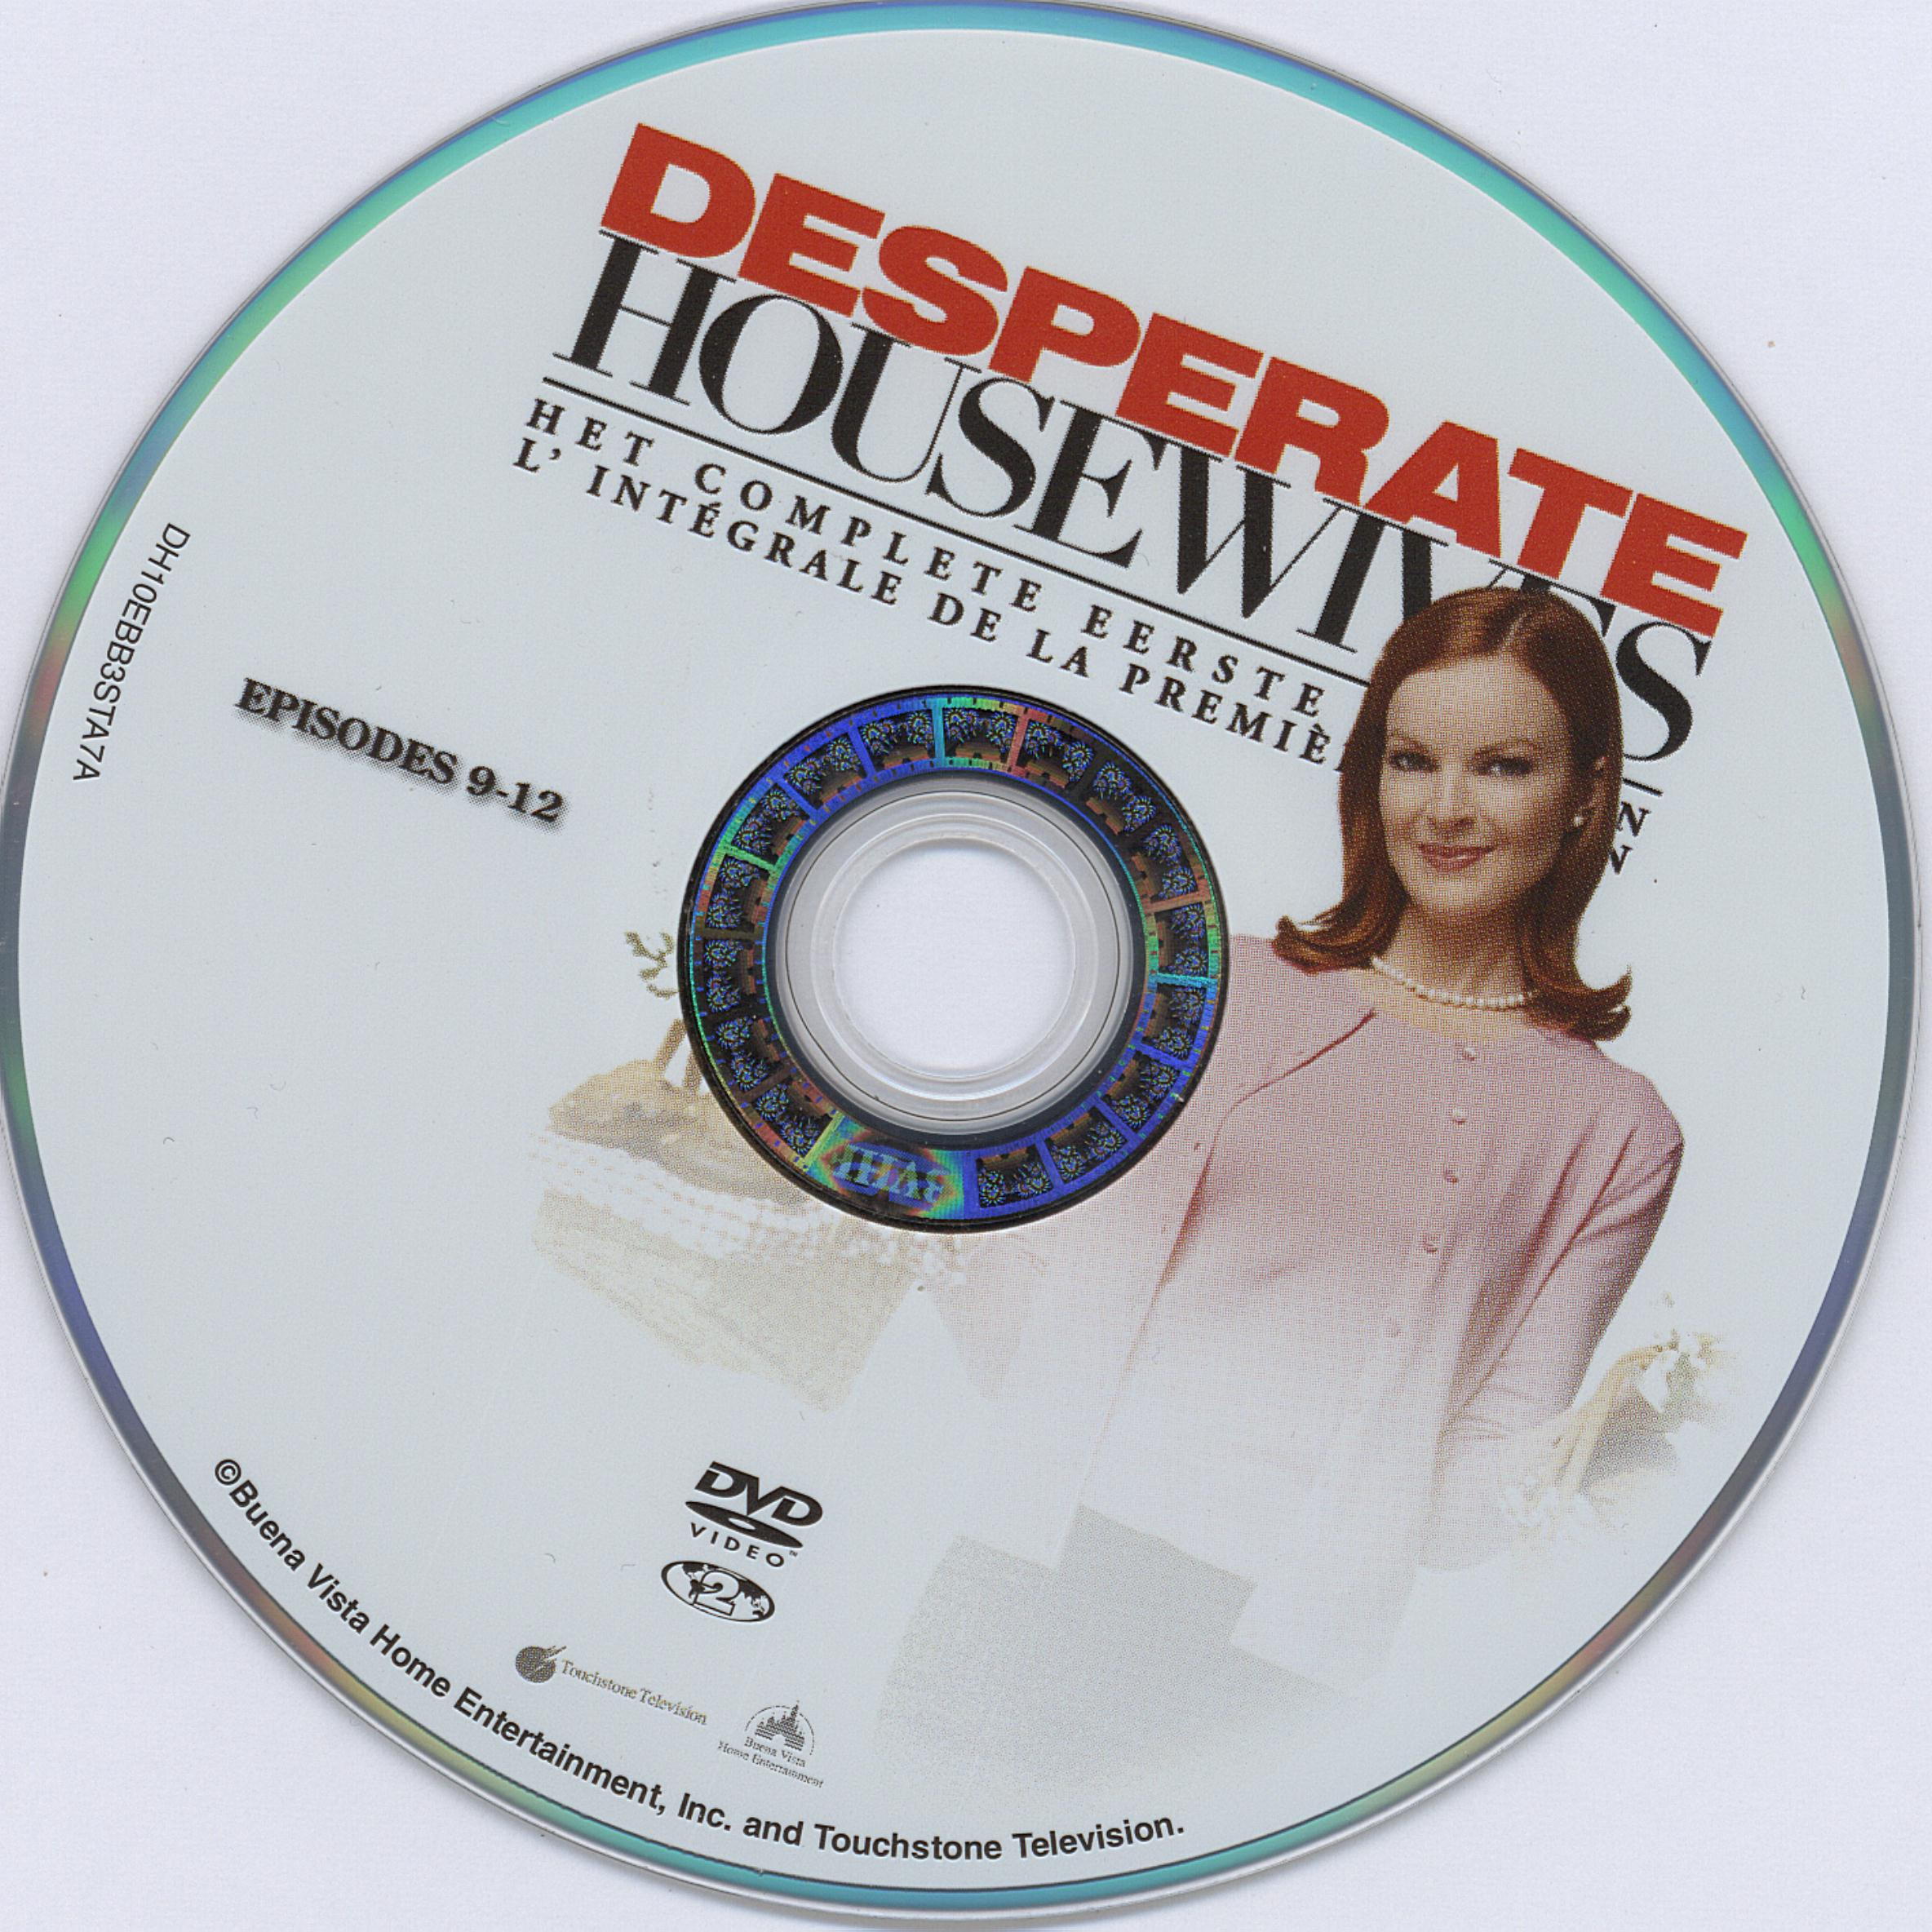 Desperate housewives Saison 1 vol 3